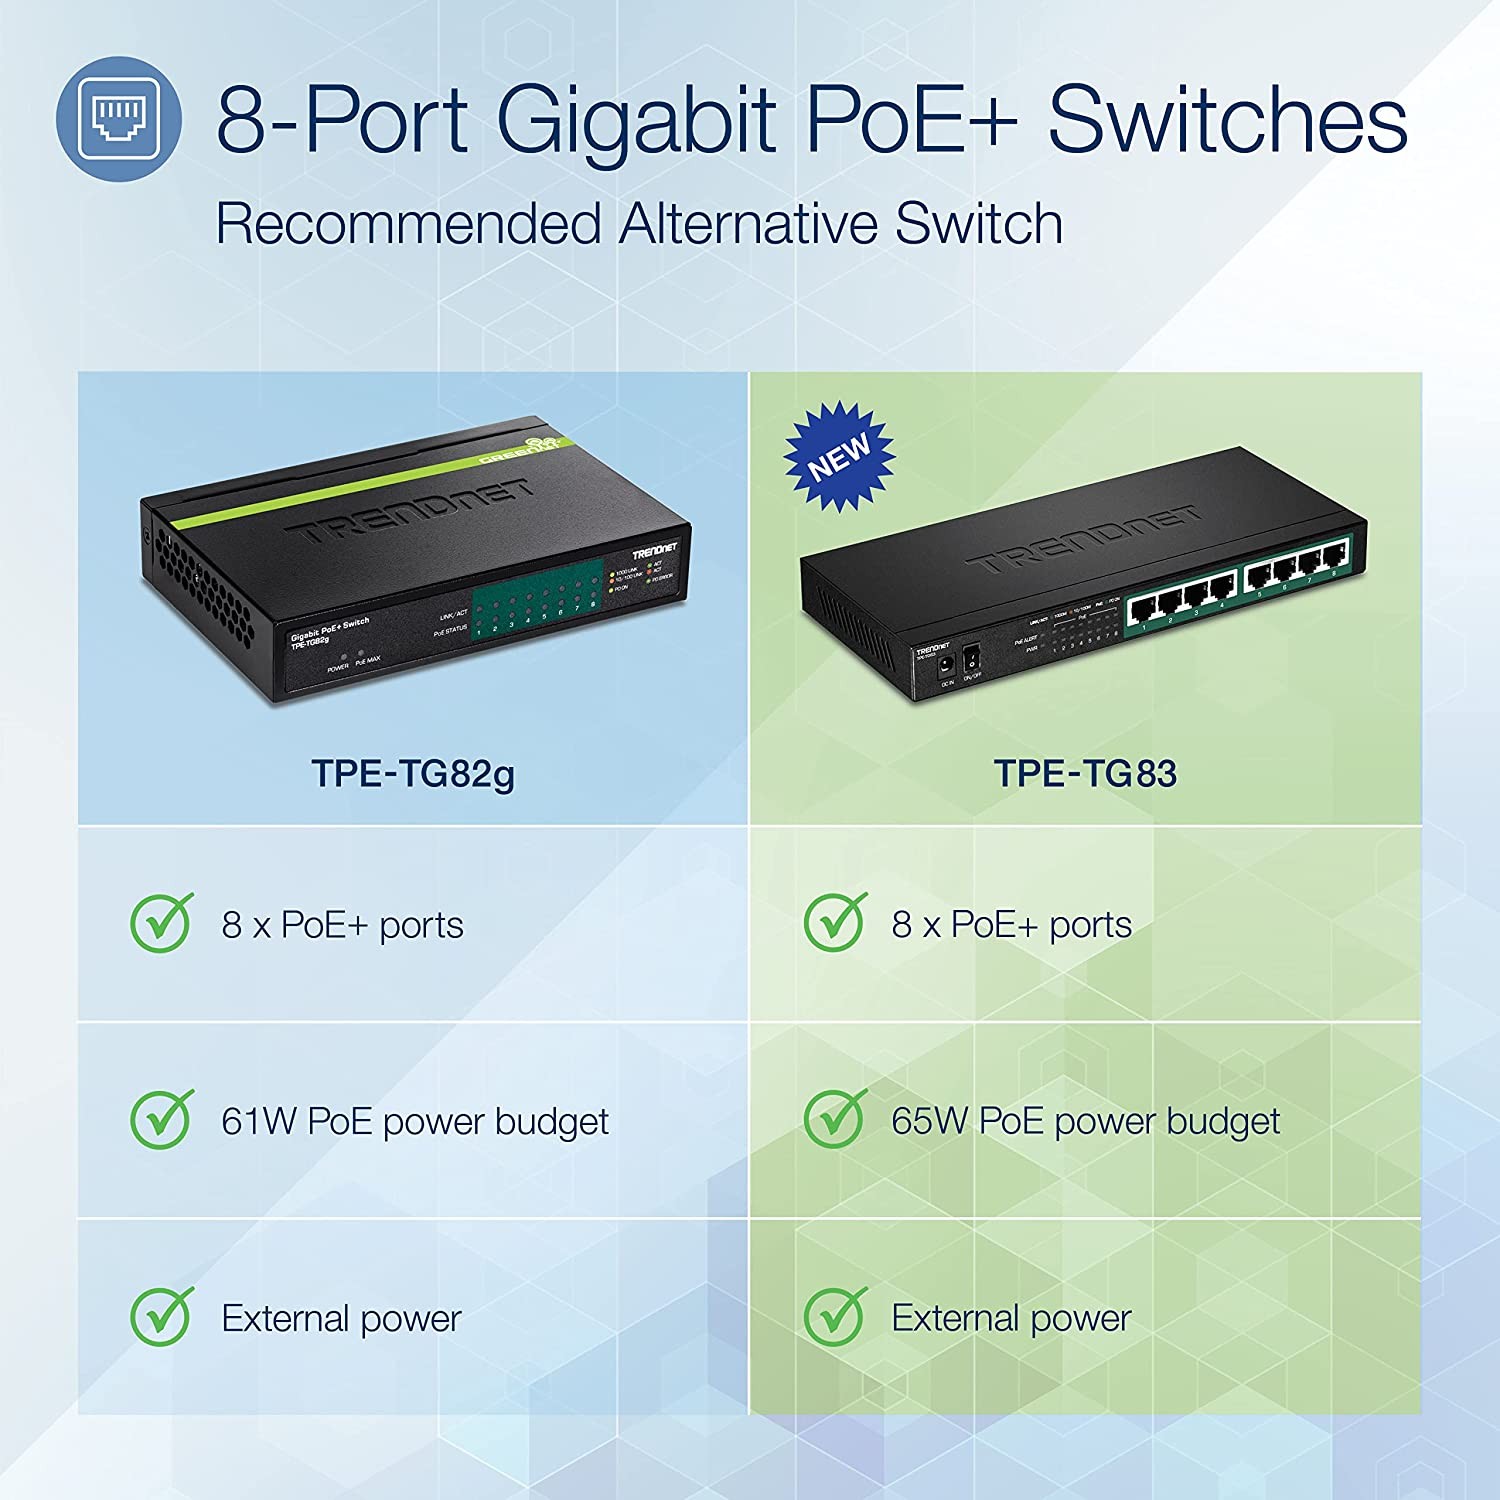 PROVANTAGE: TRENDnet TPE-TG83 8-Port Gigabit PoE+ Switch (65W)